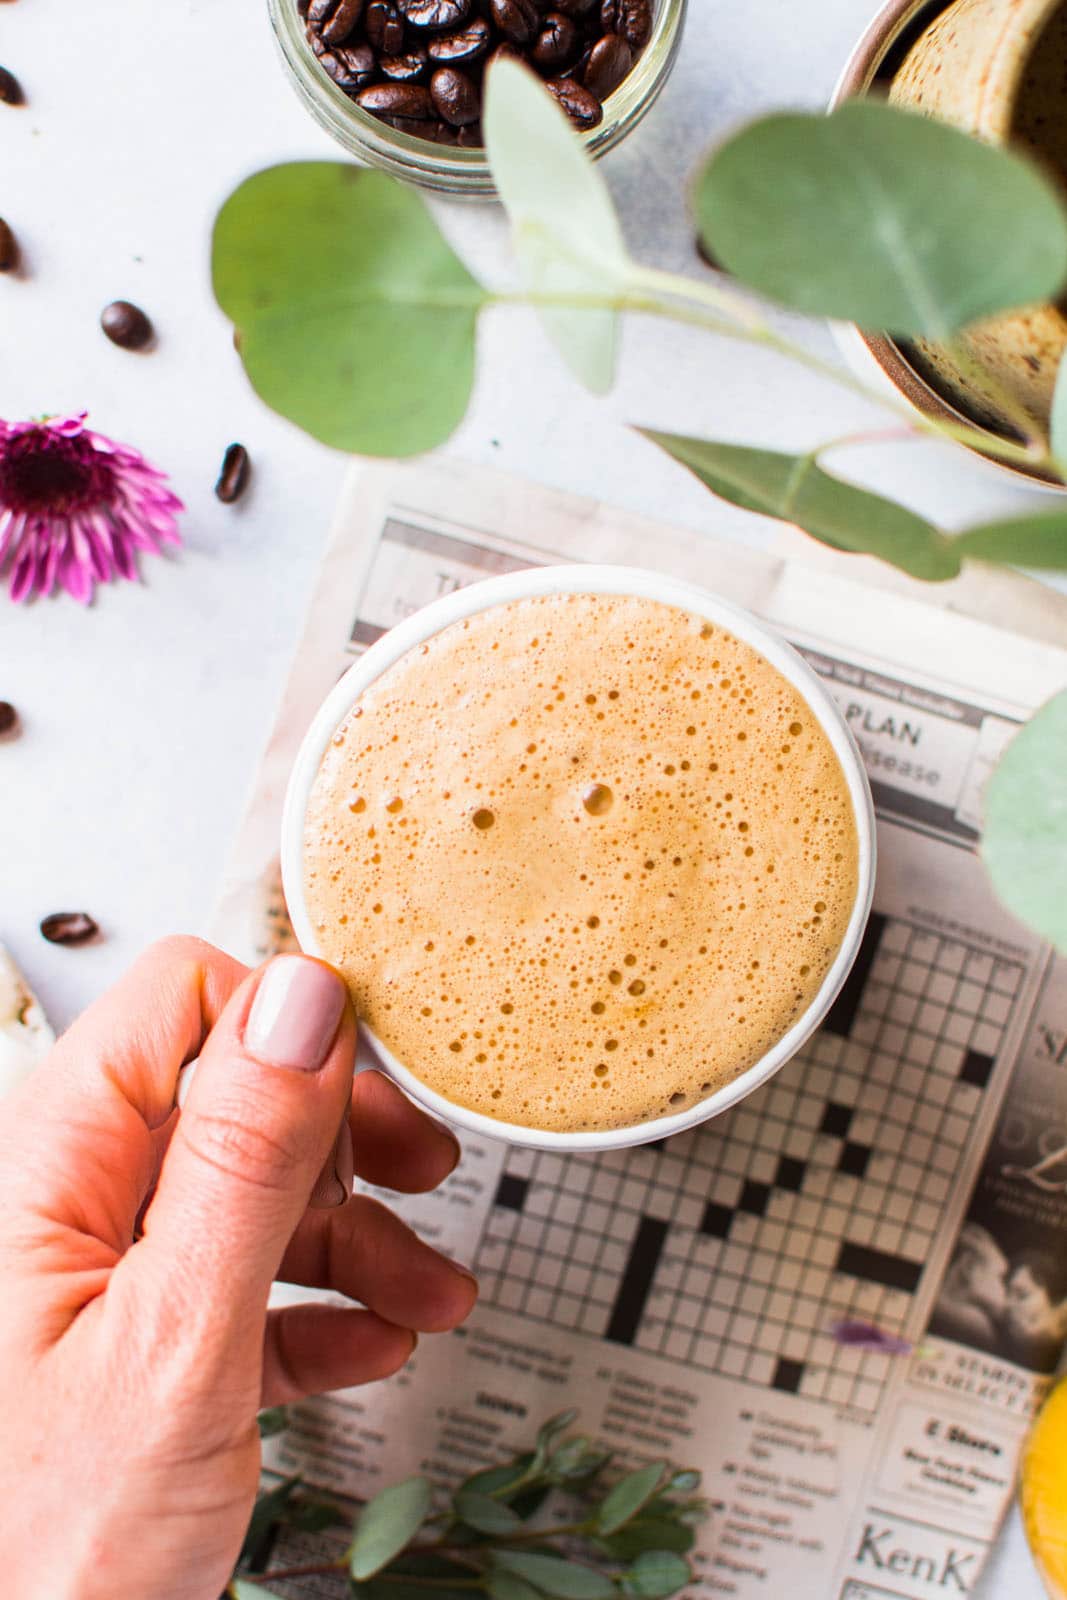 How to Make Bulletproof Coffee in 3 Easy Steps - Whole30 + Vegan option